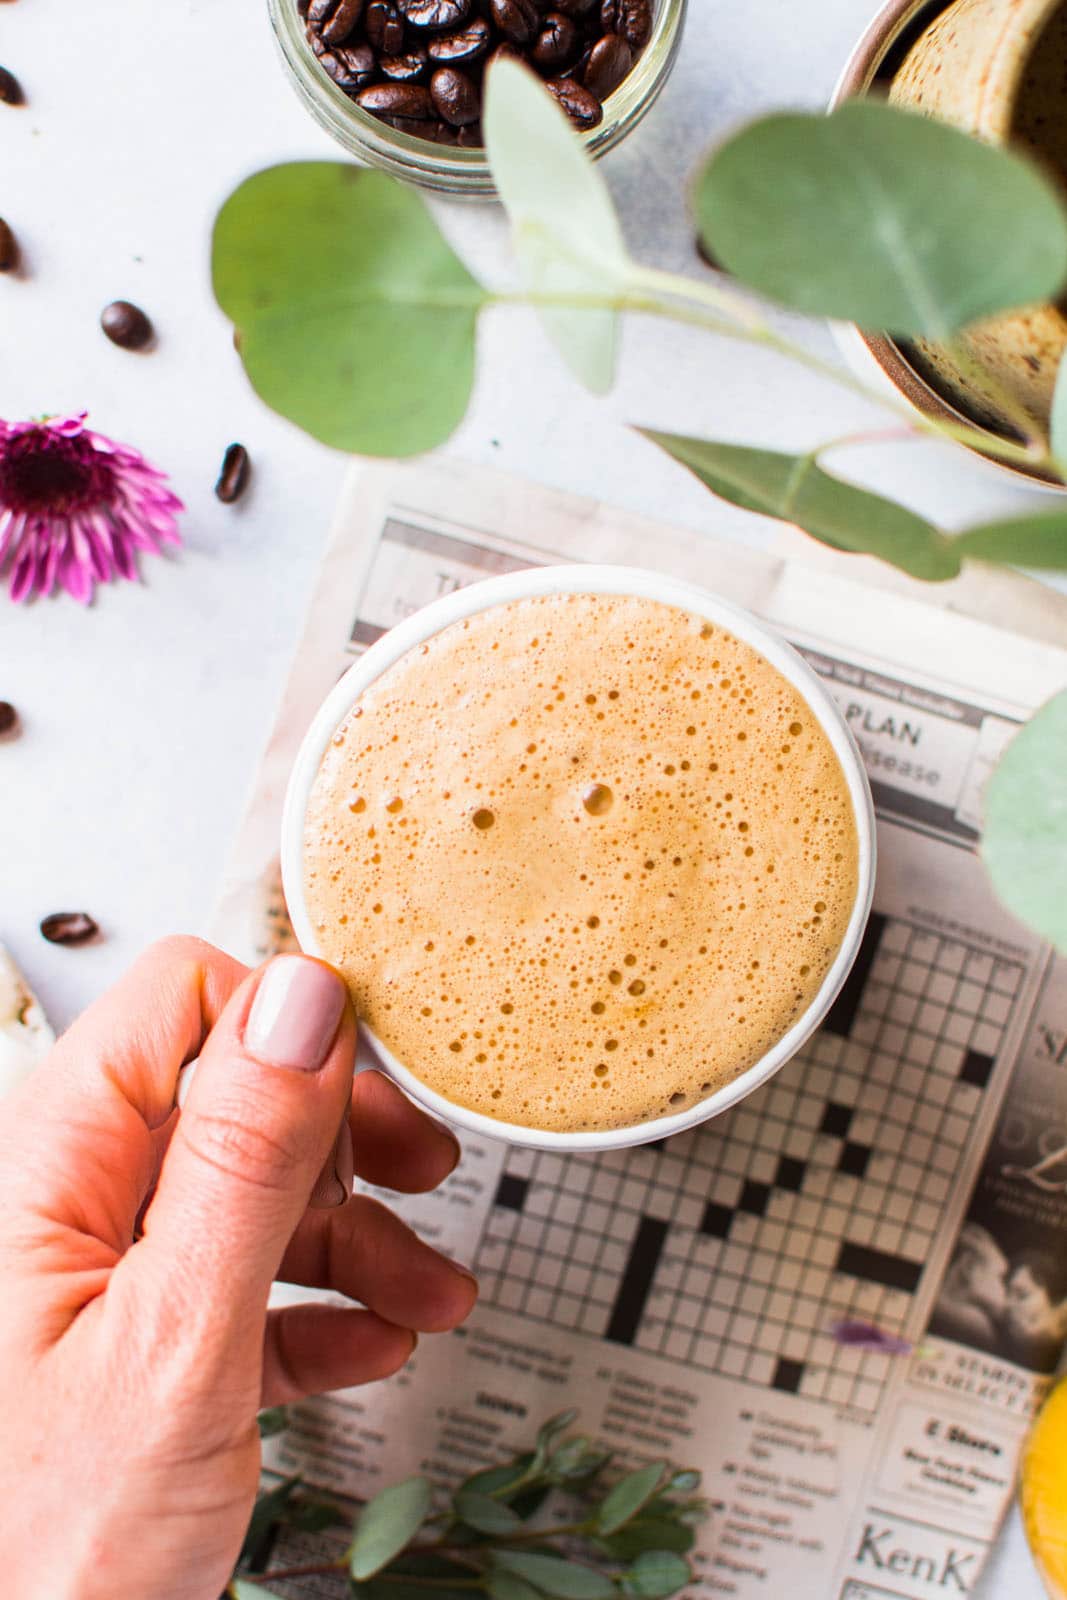 How to Make Bulletproof Coffee in 3 Easy Steps - Whole30 + Vegan option